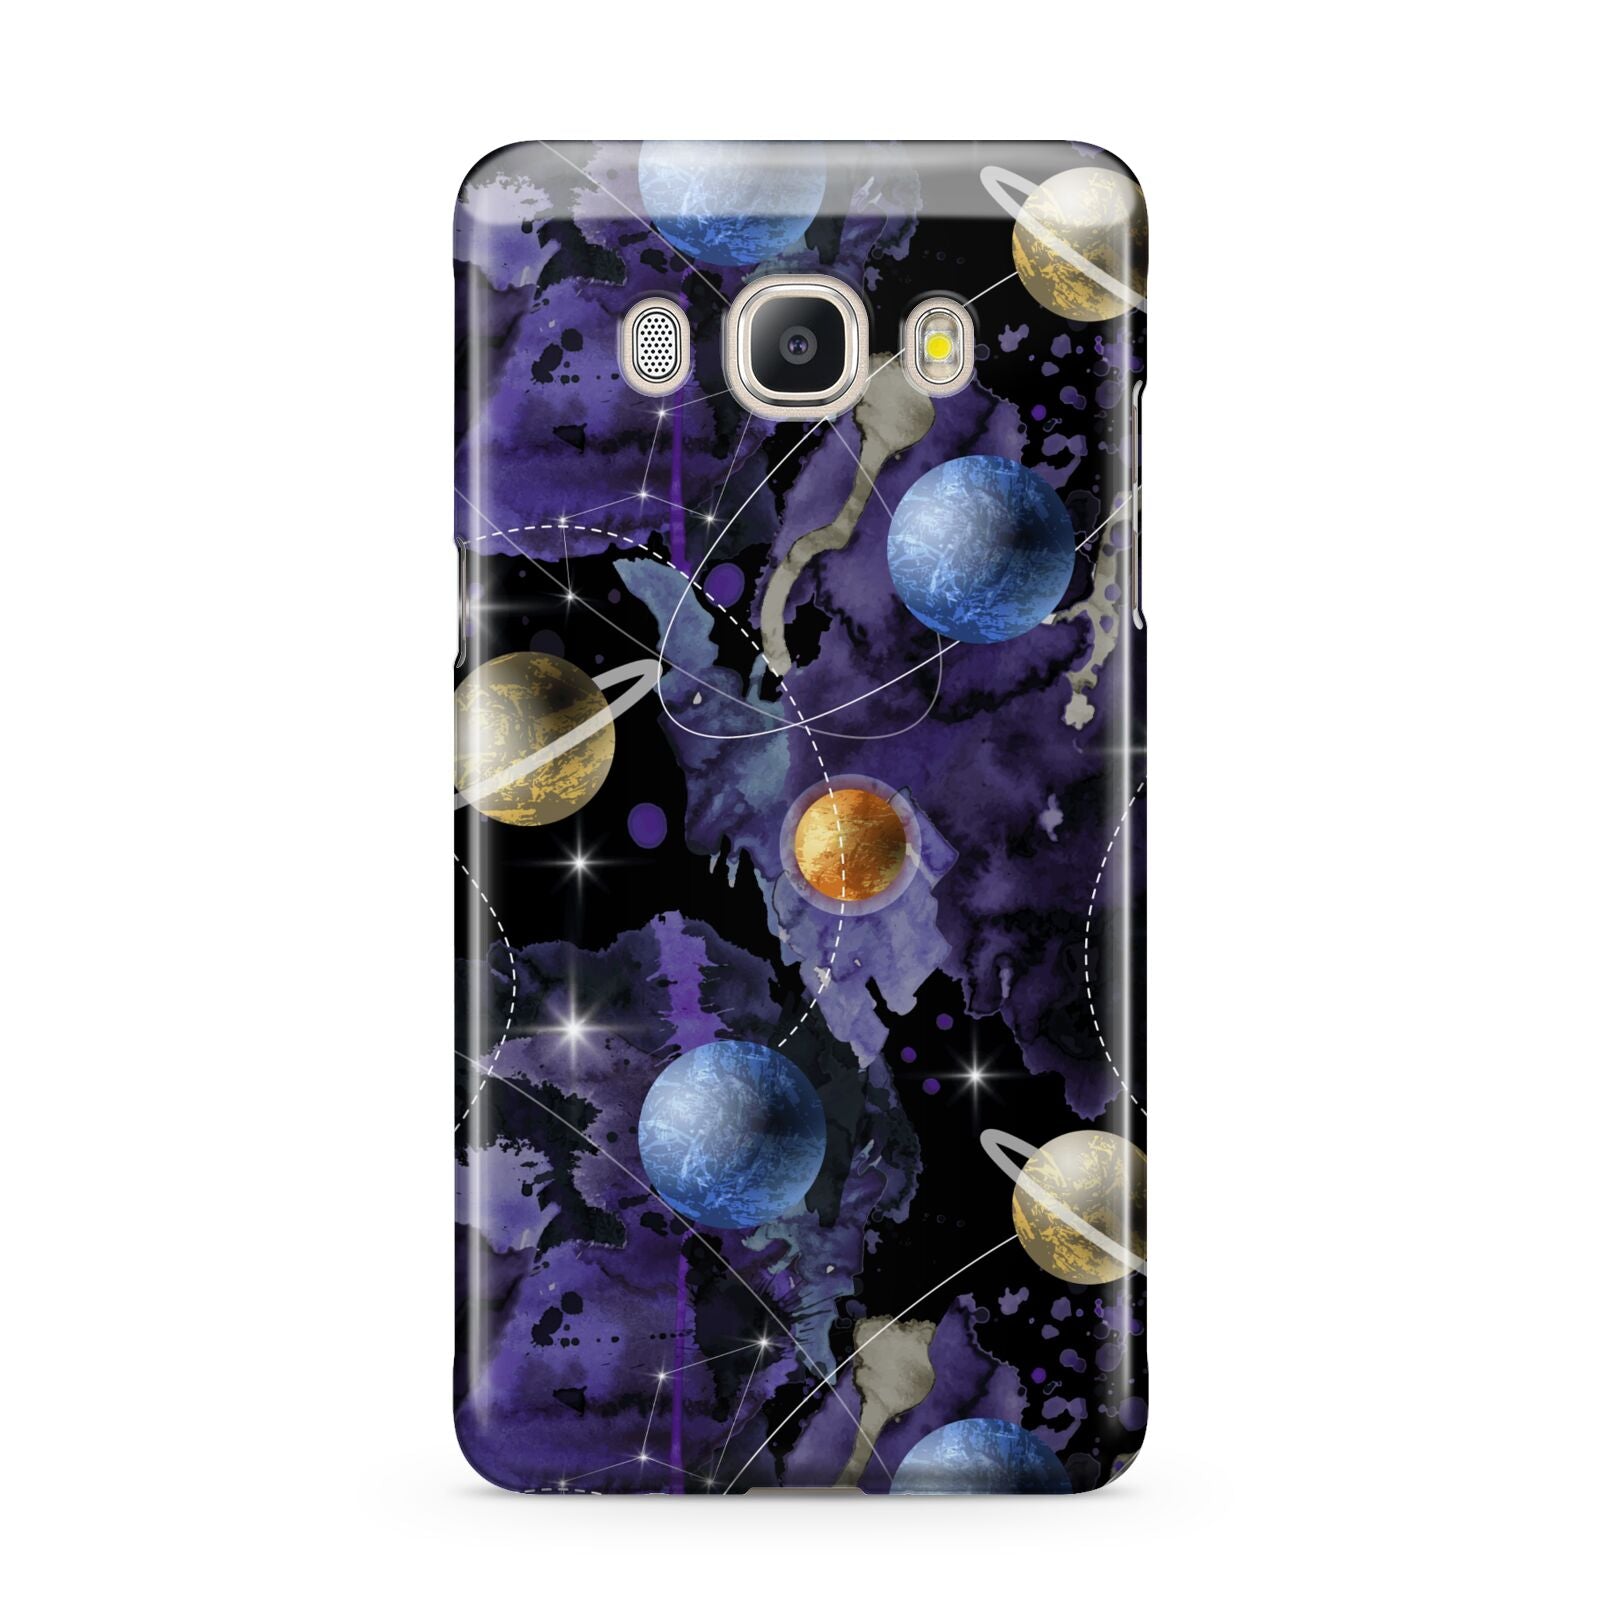 Planet Samsung Galaxy J5 2016 Case